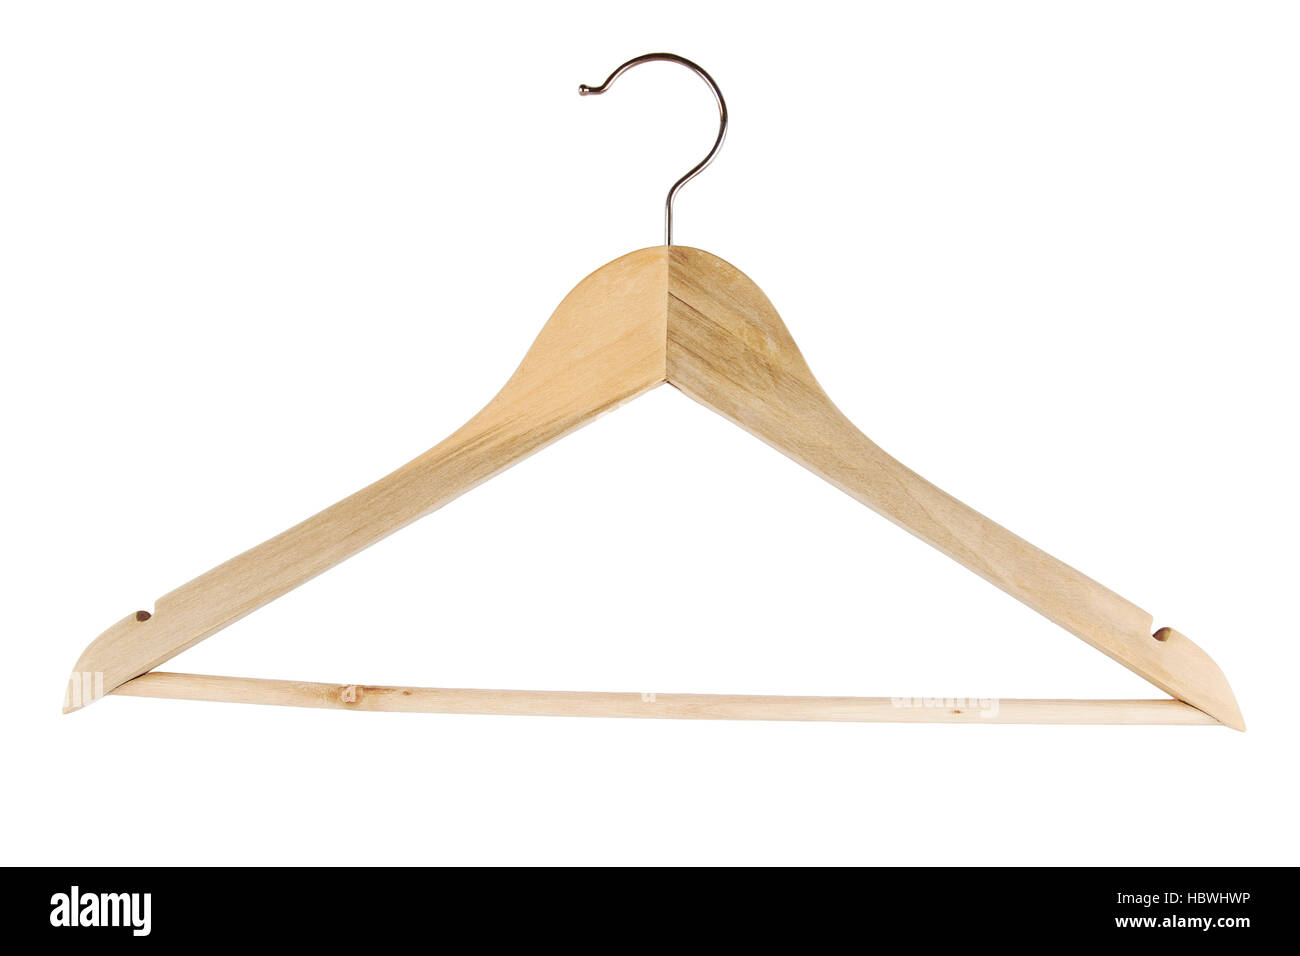 Wooden coat hanger on plain background Stock Photo